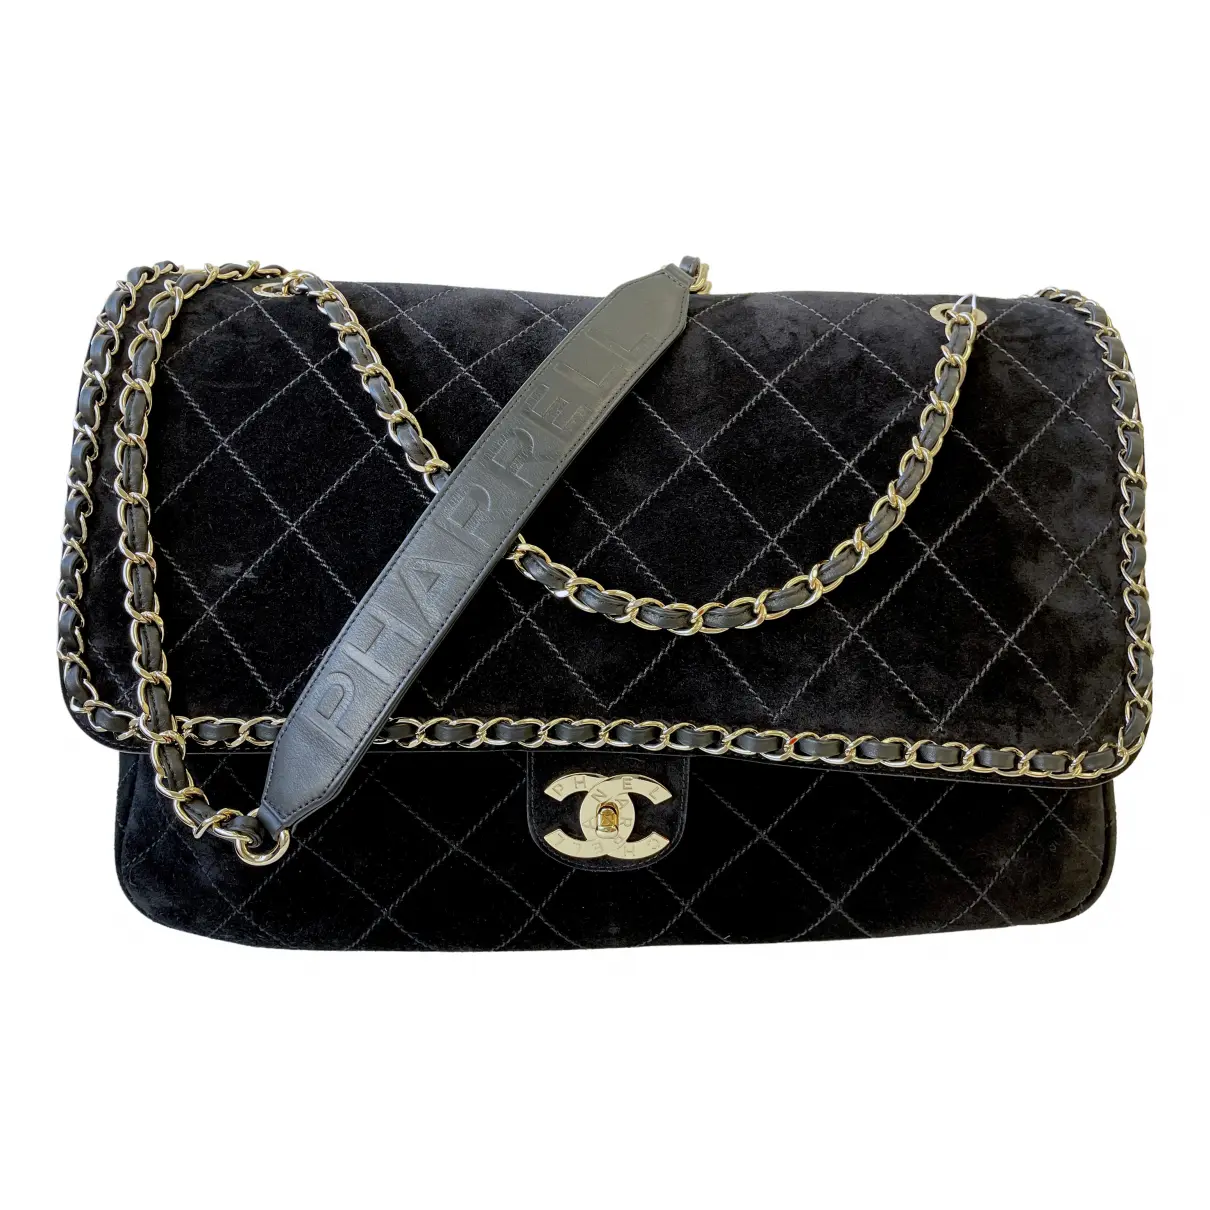 Handbag Chanel x Pharrell Williams